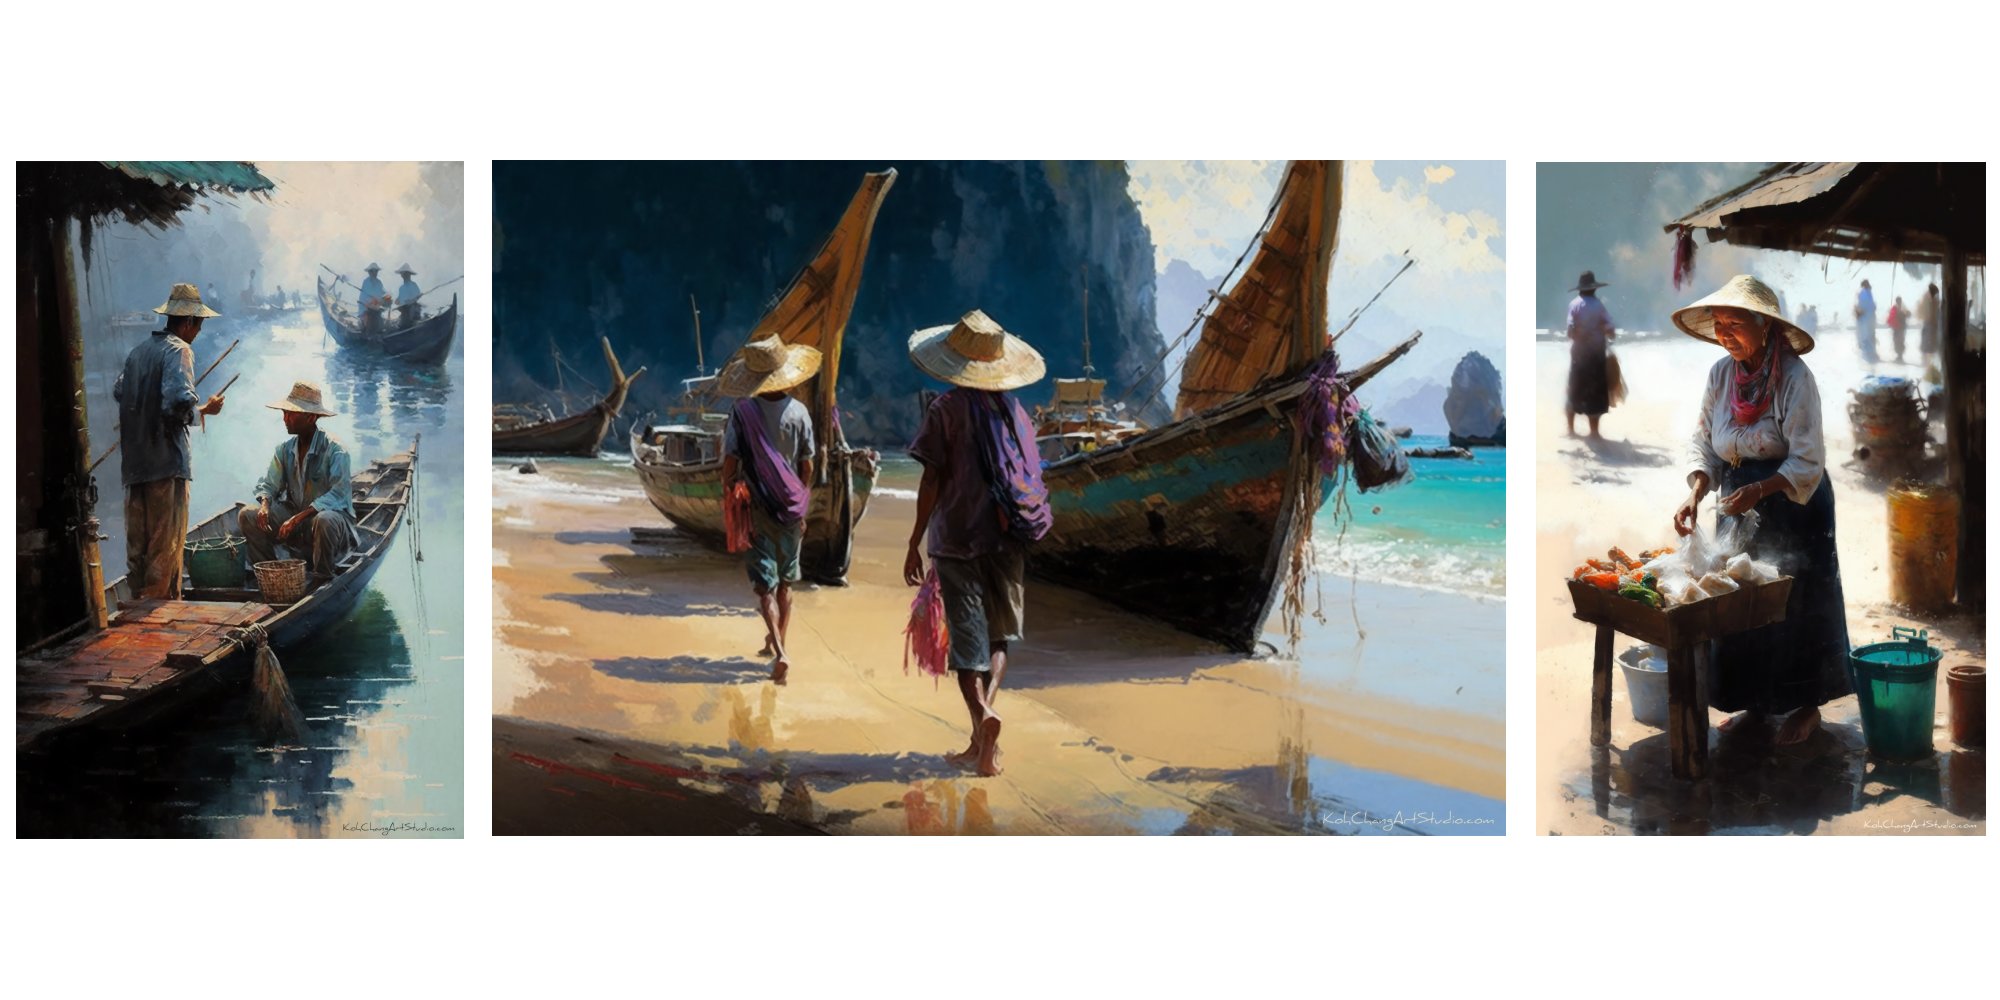 TALES OF TIDES Artistic Design - Fishermen on sandy shores, boats awaiting tide’s return